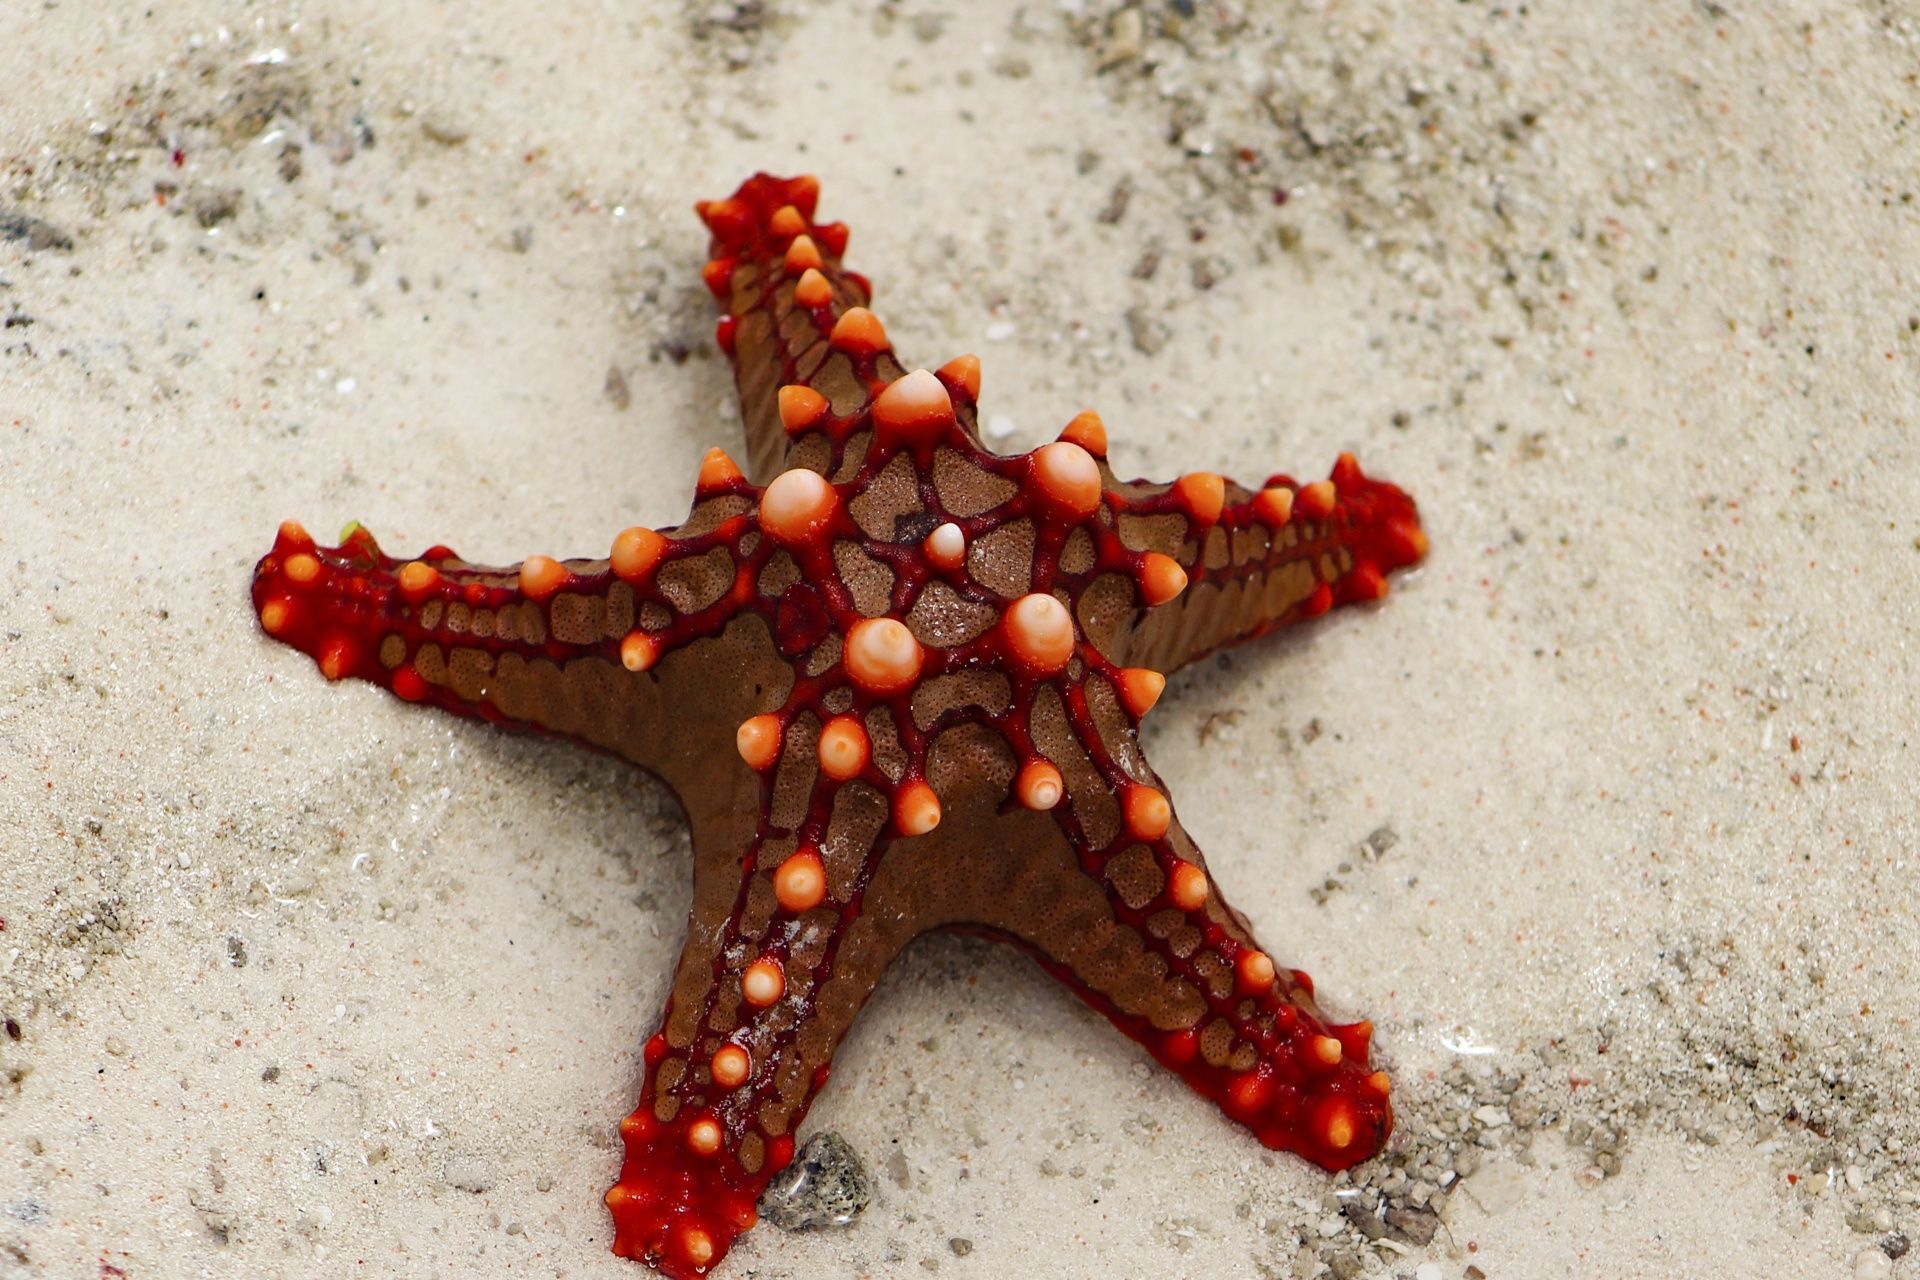 Are Starfish Carnivores